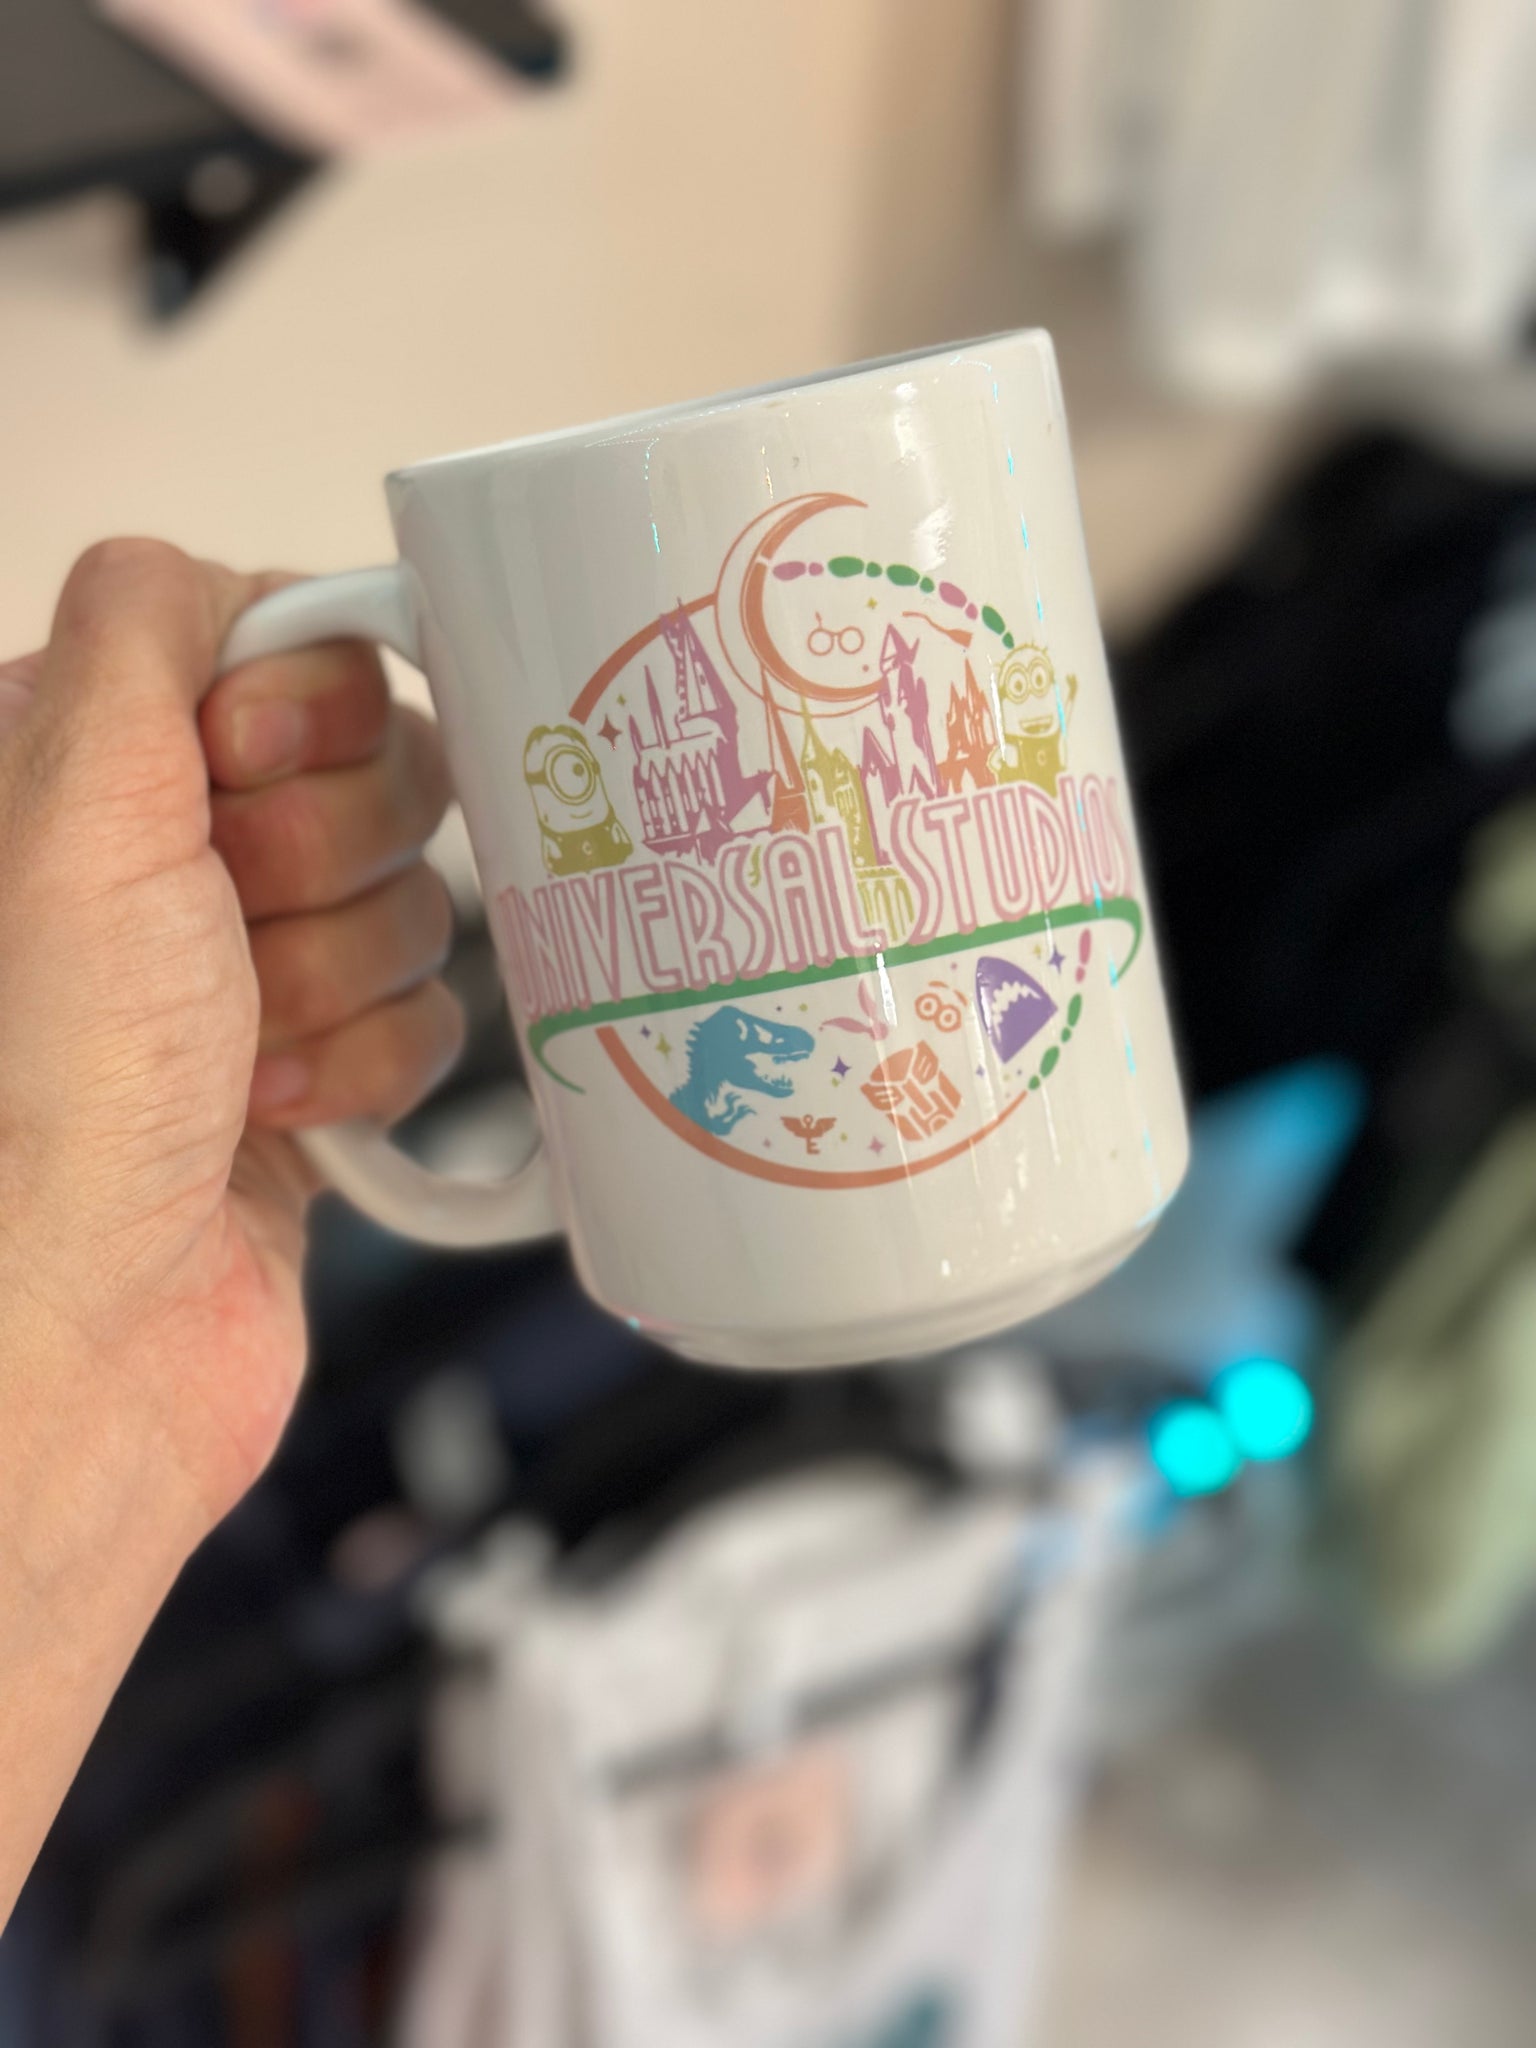 Universal Studios coffee mug